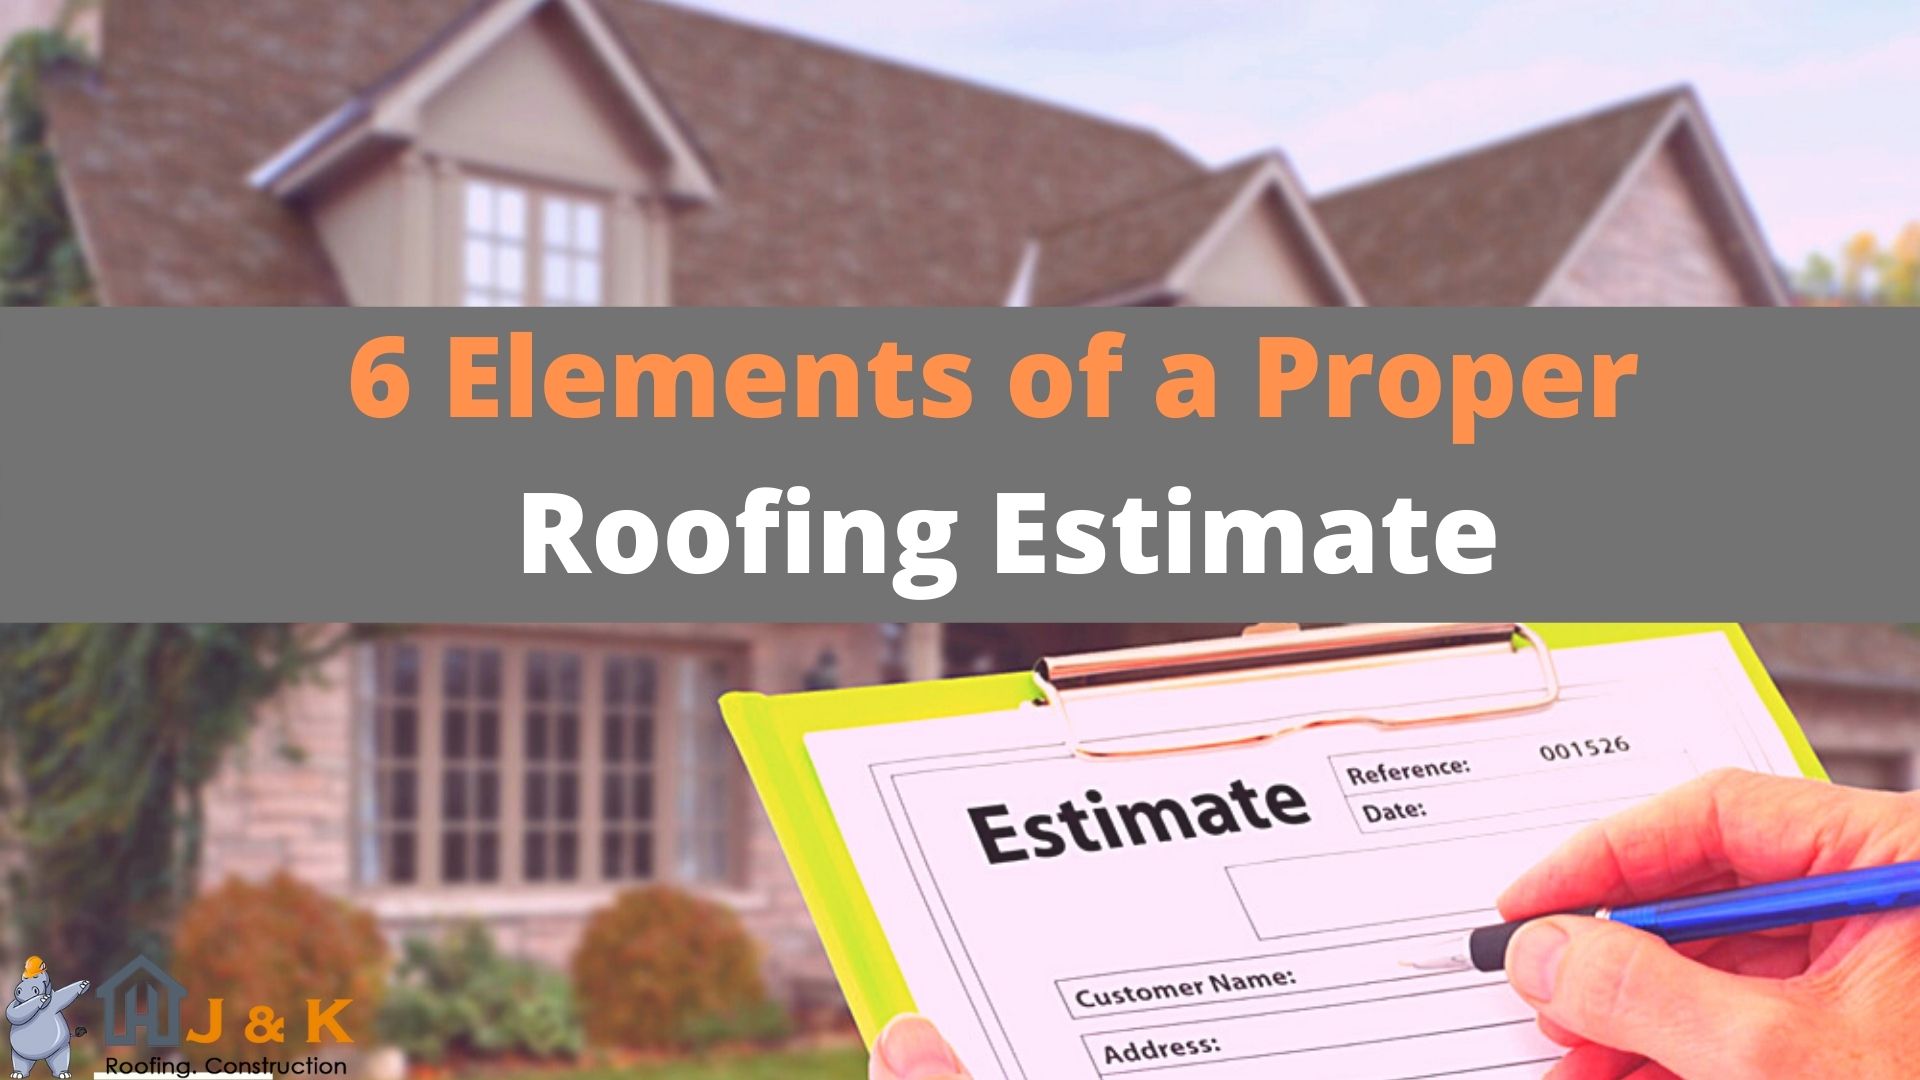 JKroofingtx share useful tips for roofing estimate